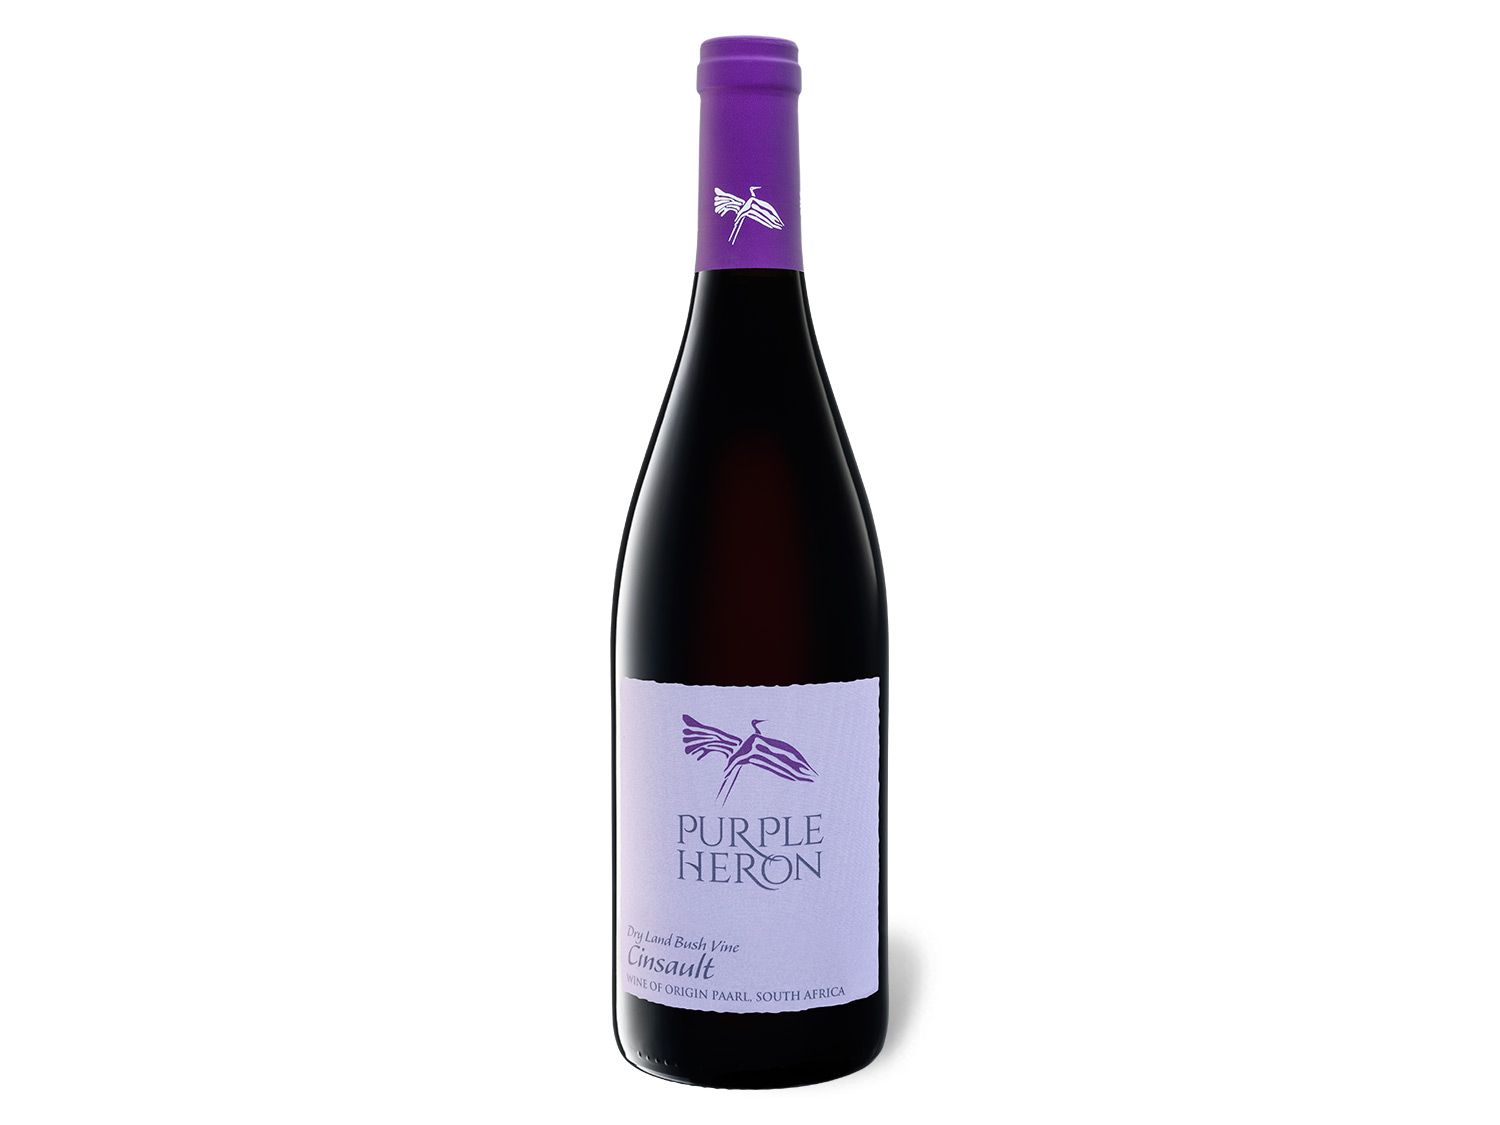 2018 trocken, Rotwein Cinsault Südafrika Purple Heron